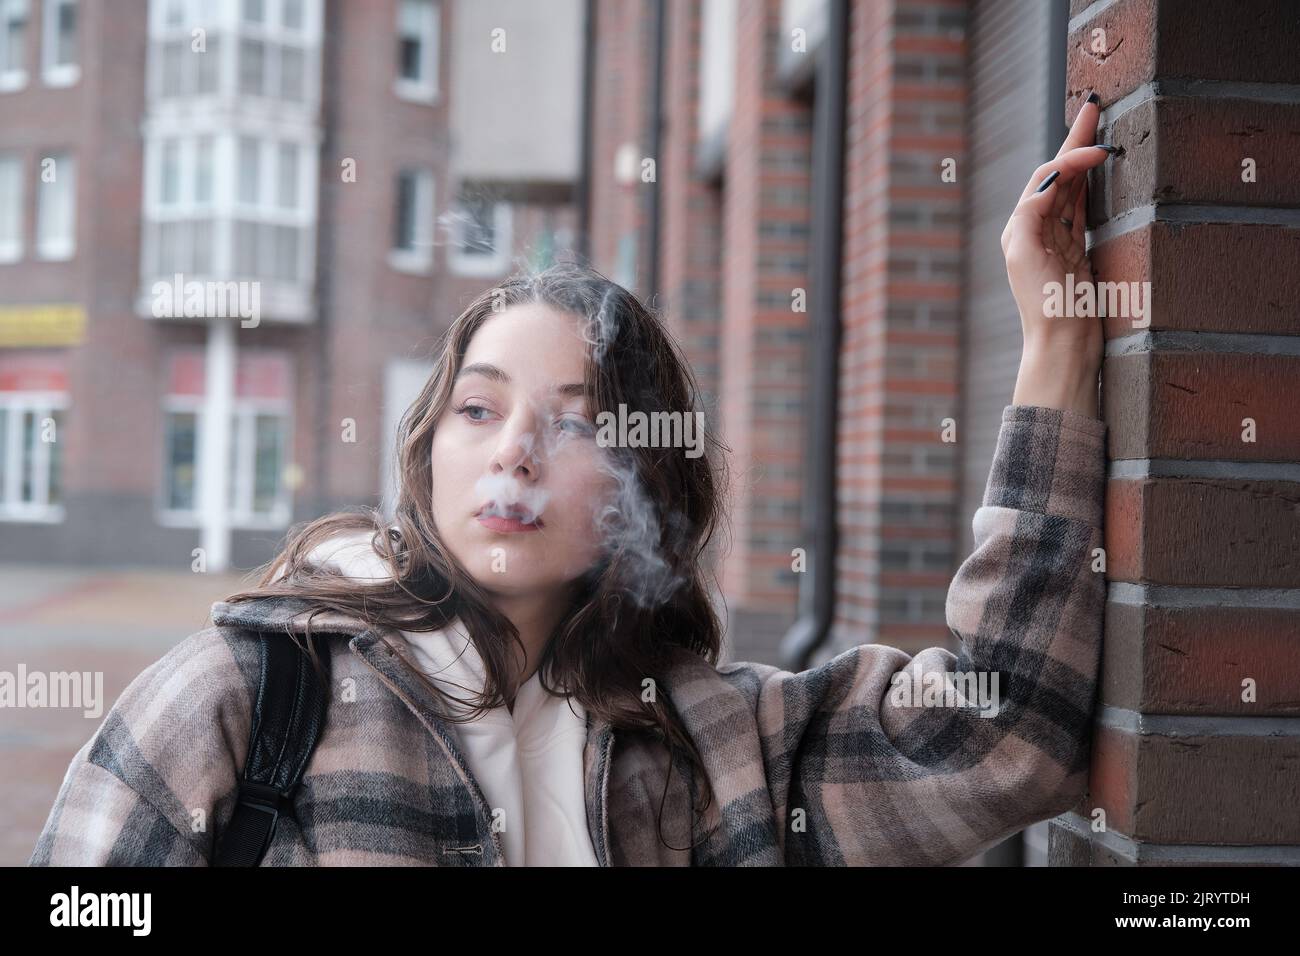 young woman on city street exhale smoke closeup portrait Stock Photo